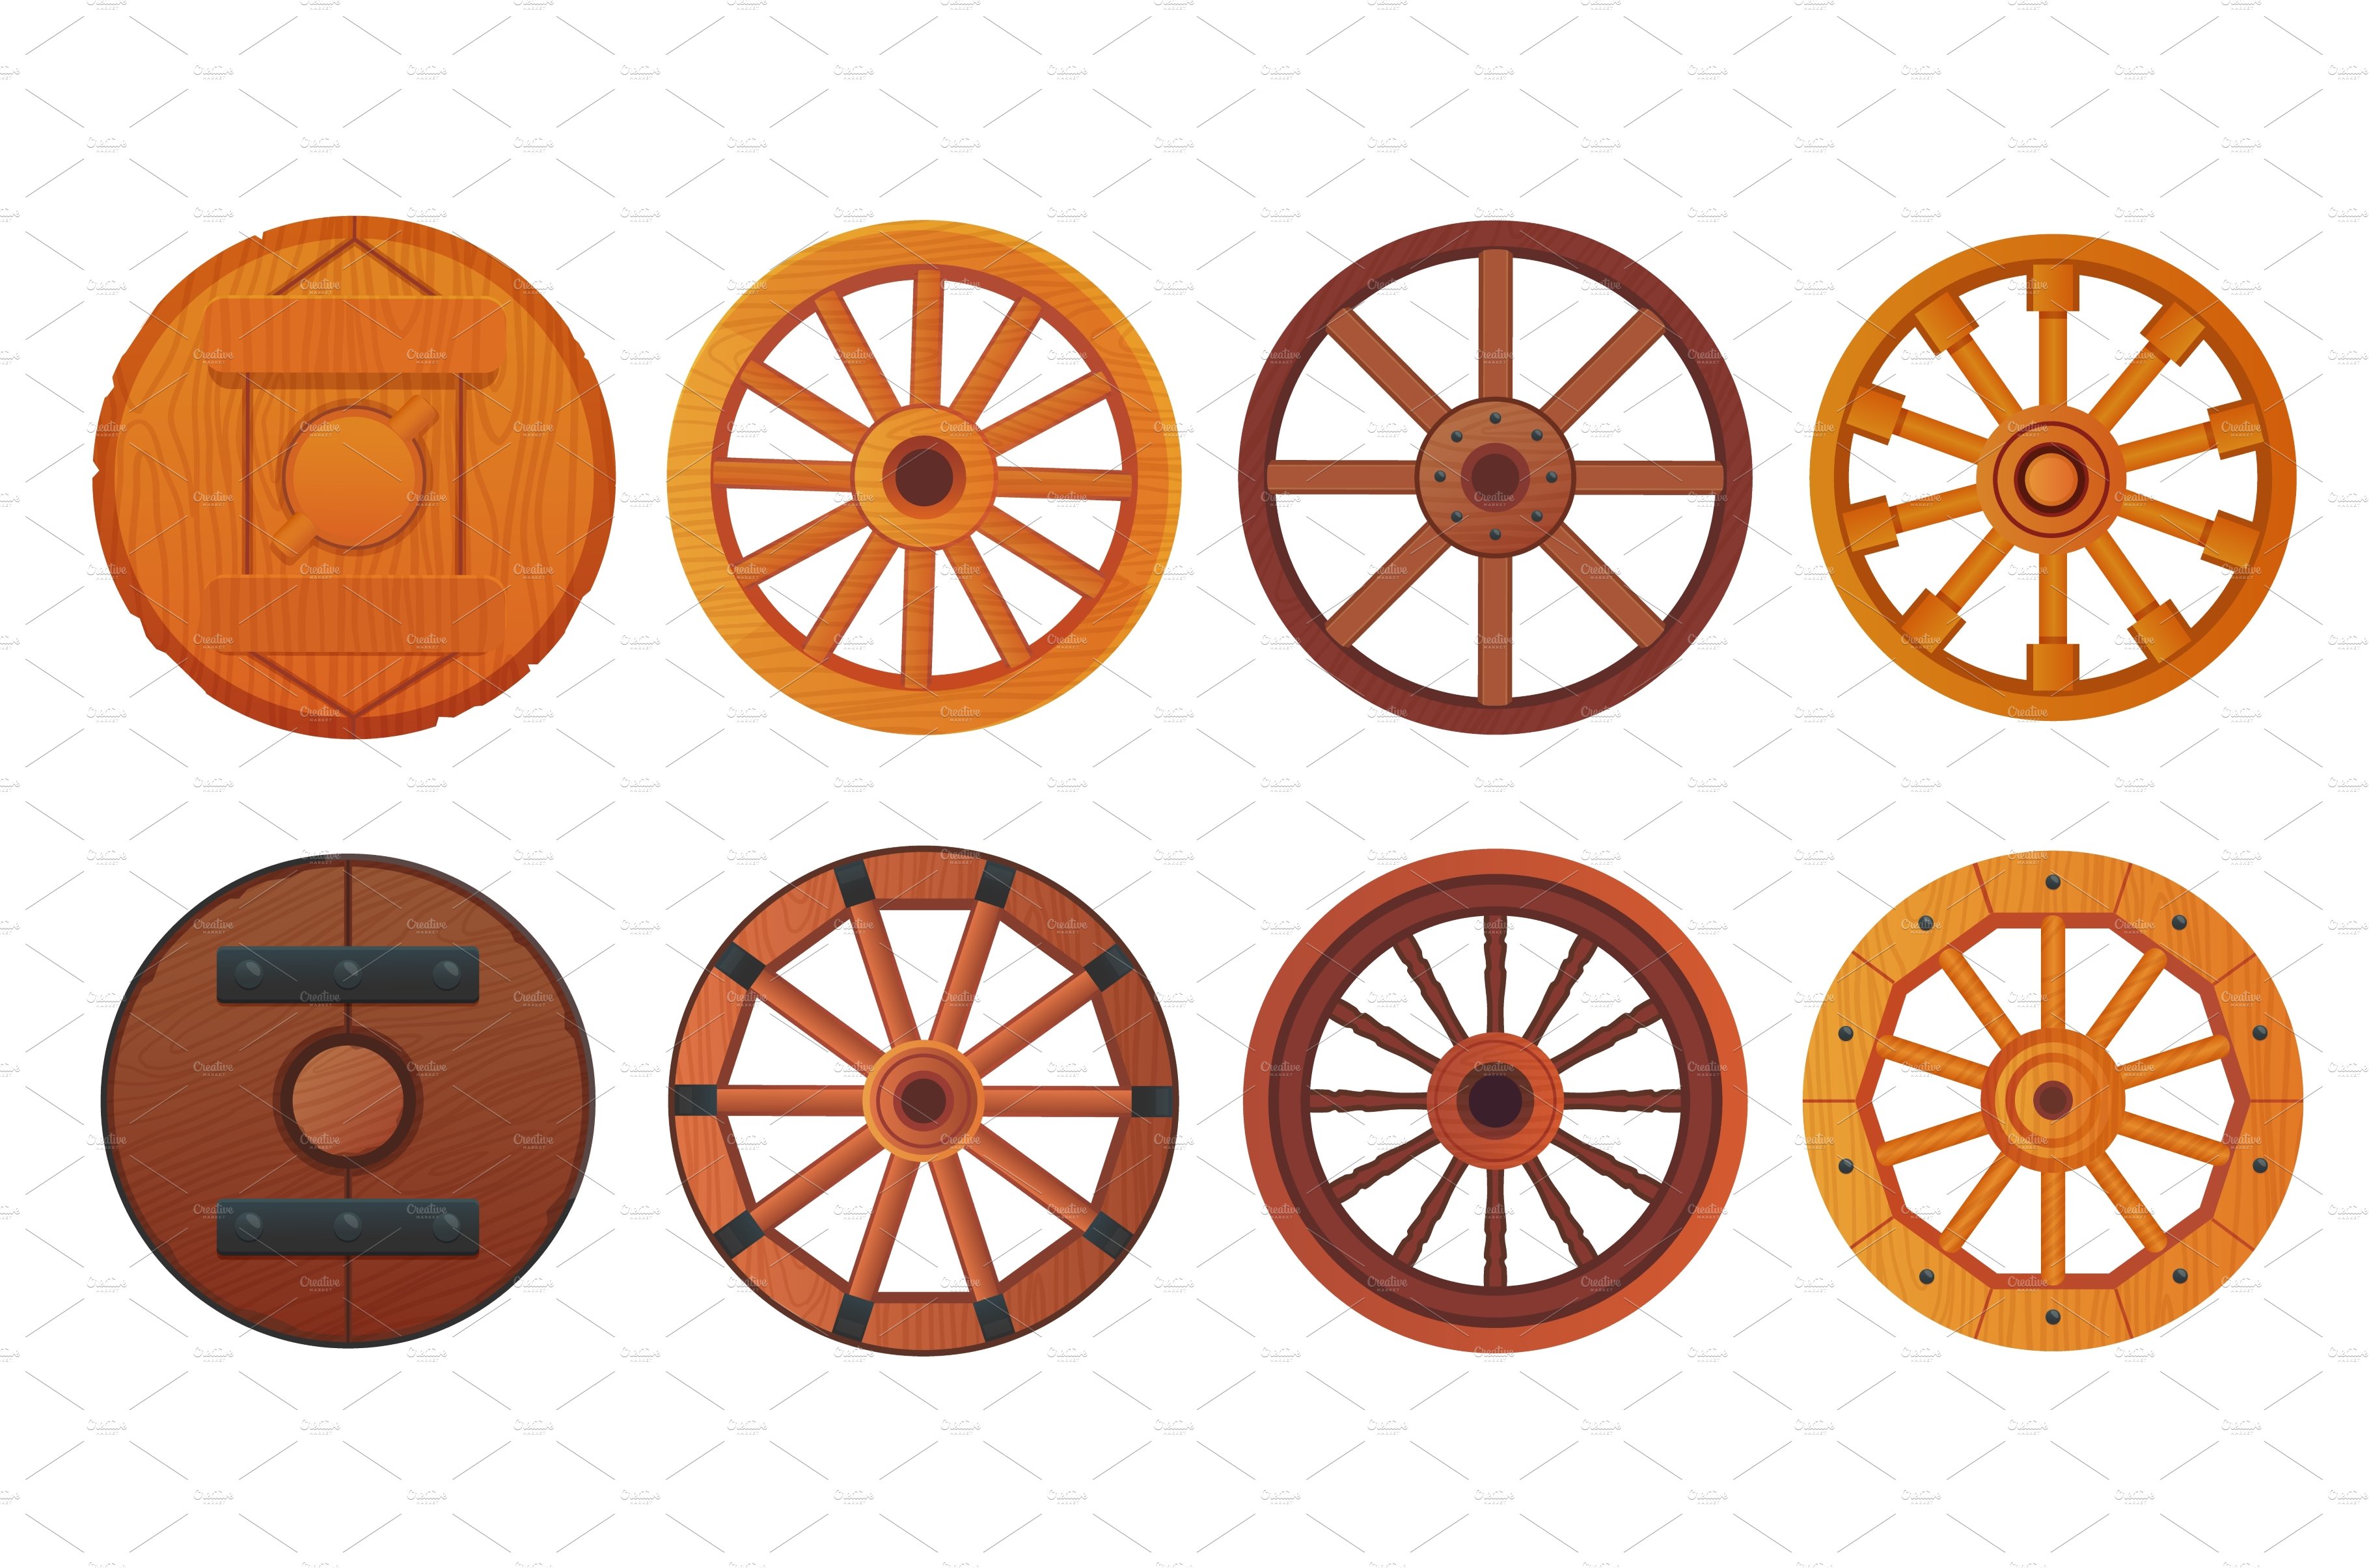 Wooden wheels. Cartoon wood wheel of cover image.